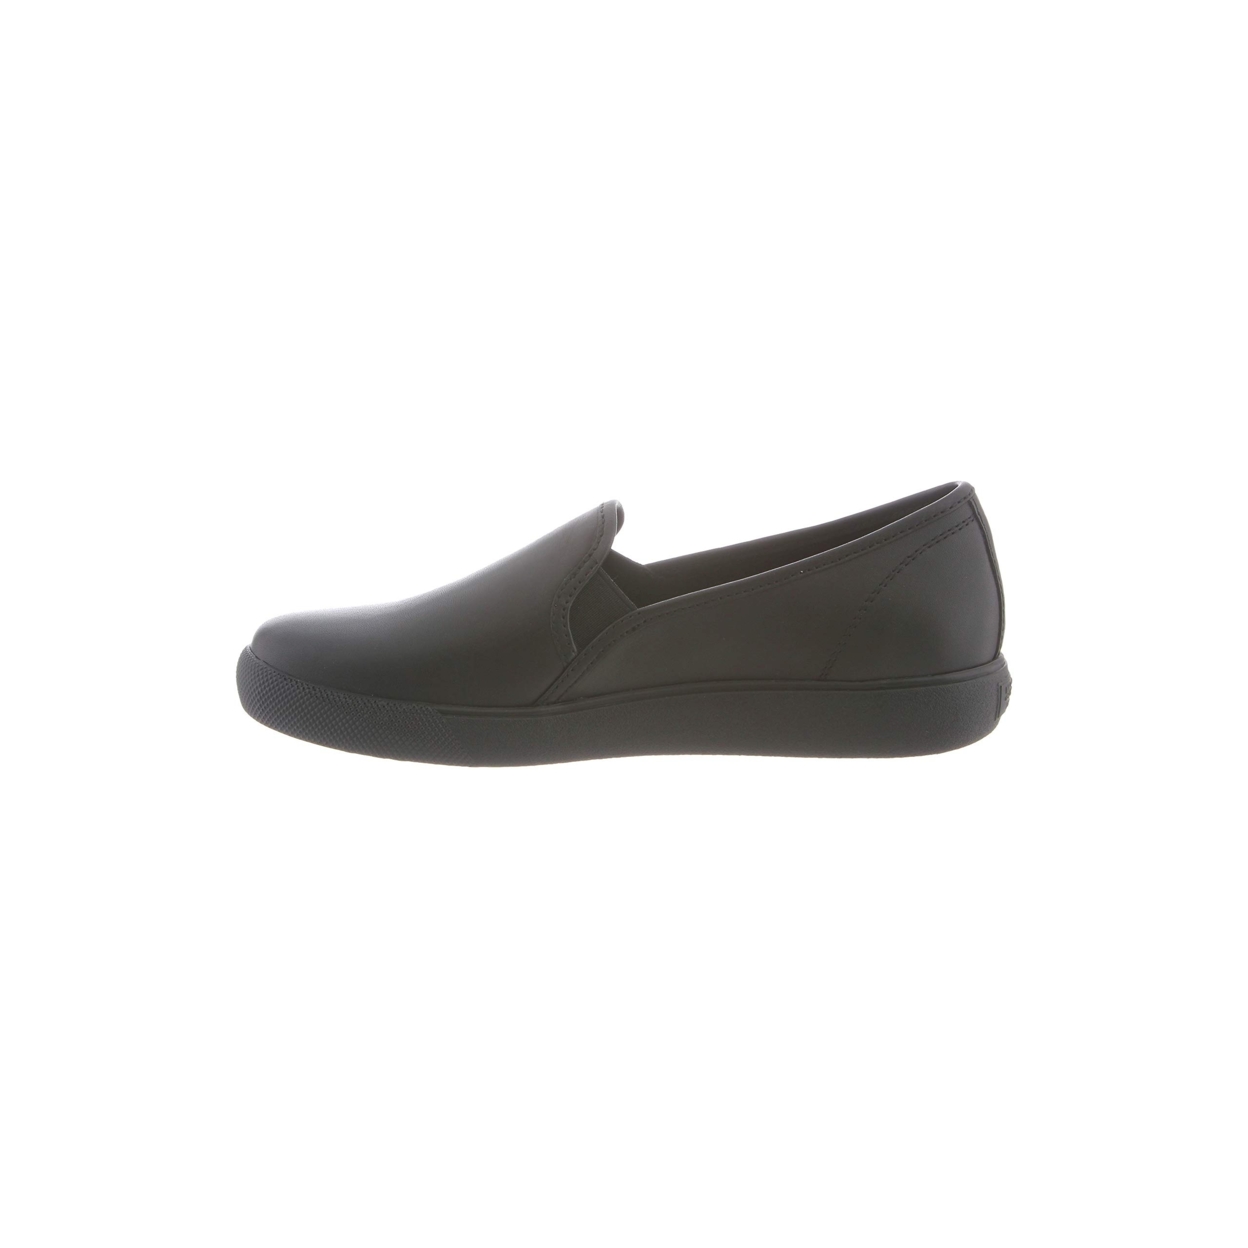 Klogs Footwear Women's Padma Shoe BLACK FULL GRAIN - BLACK FULL GRAIN, 8-M